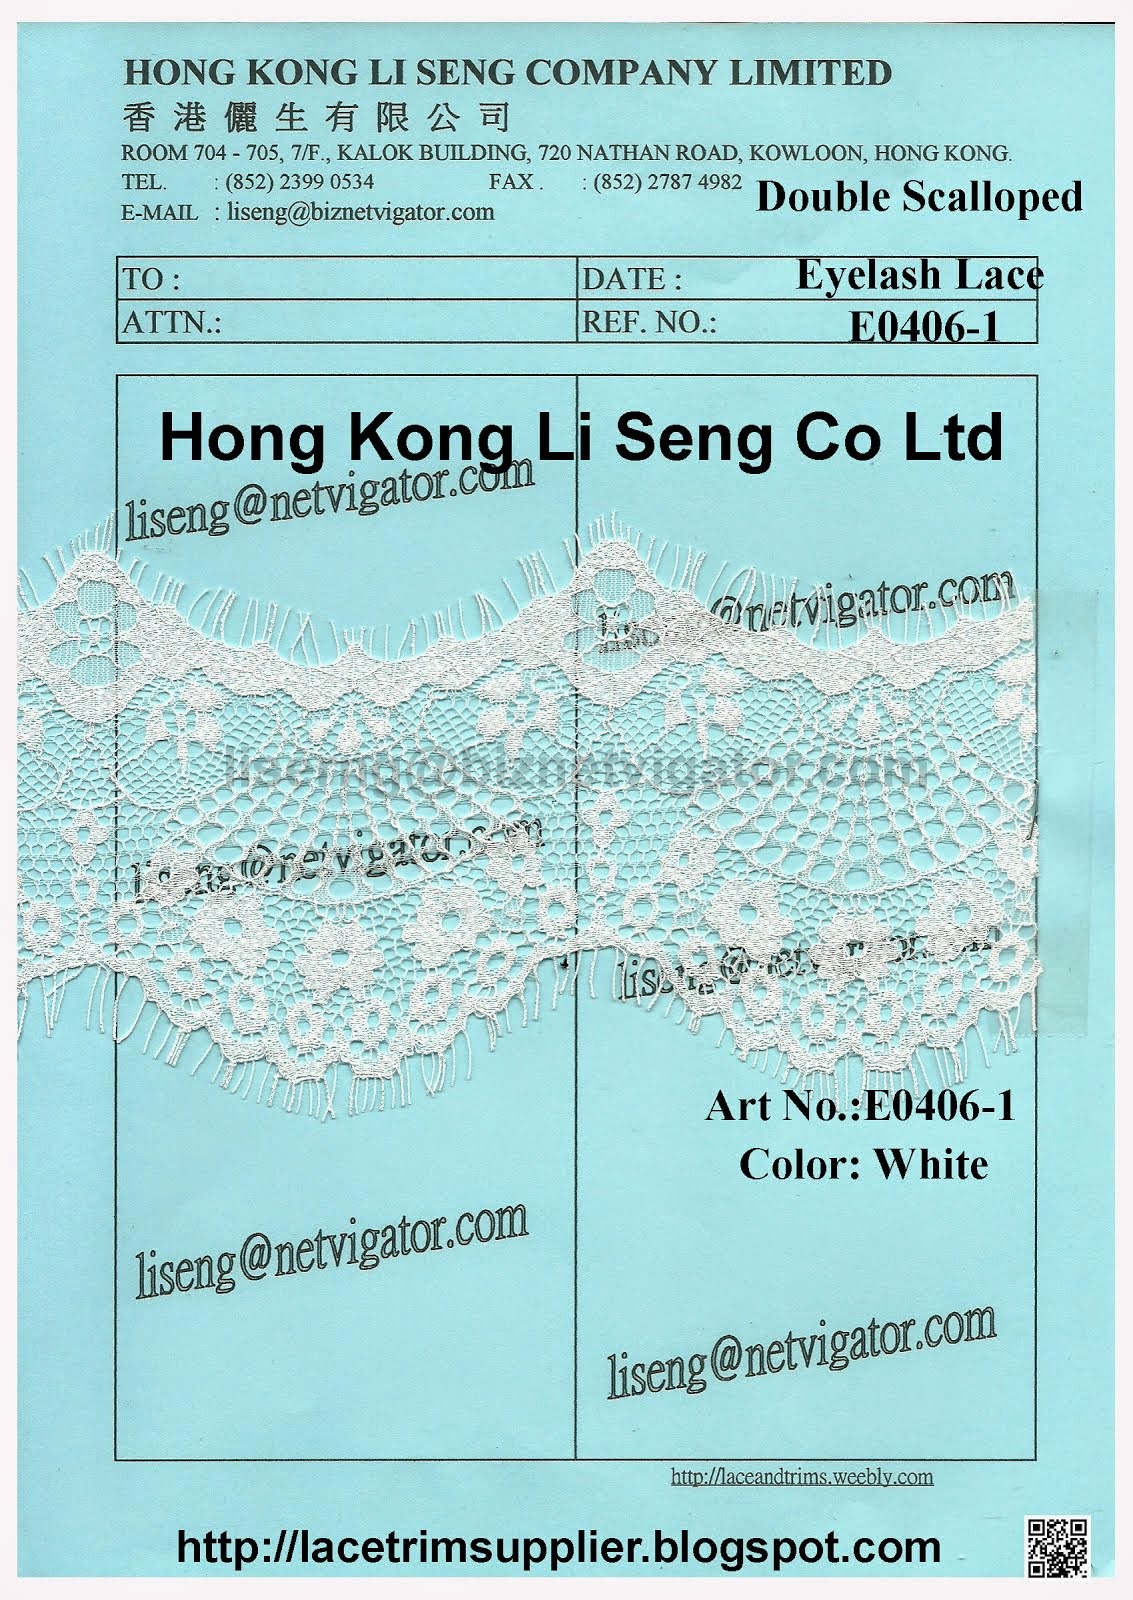 Double Scalloped Eyelash Lace Manufacturer - Hong Kong Li Seng Co Ltd